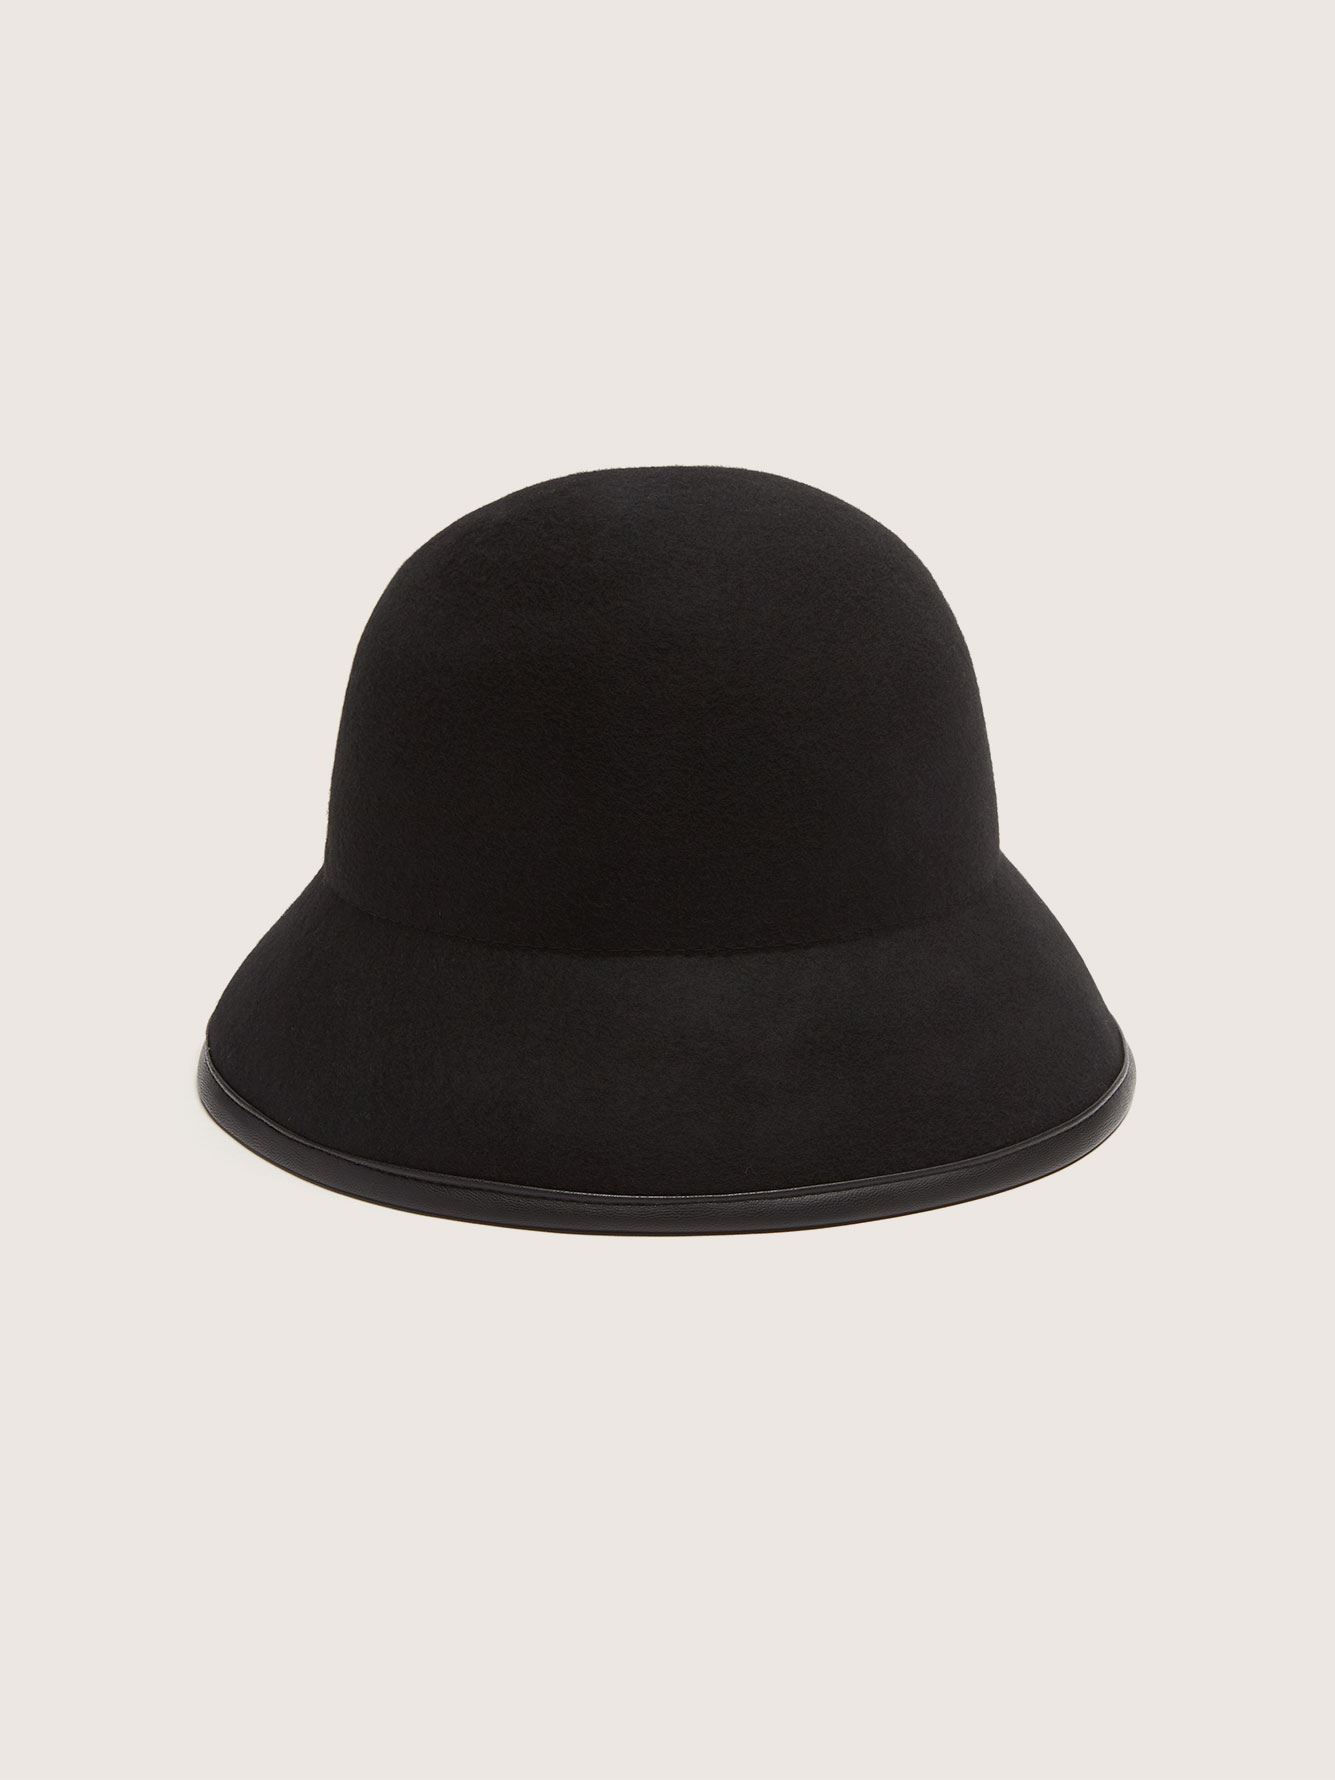 Felt Cloche Hat with Leather Details - Canadian Hat | Penningtons